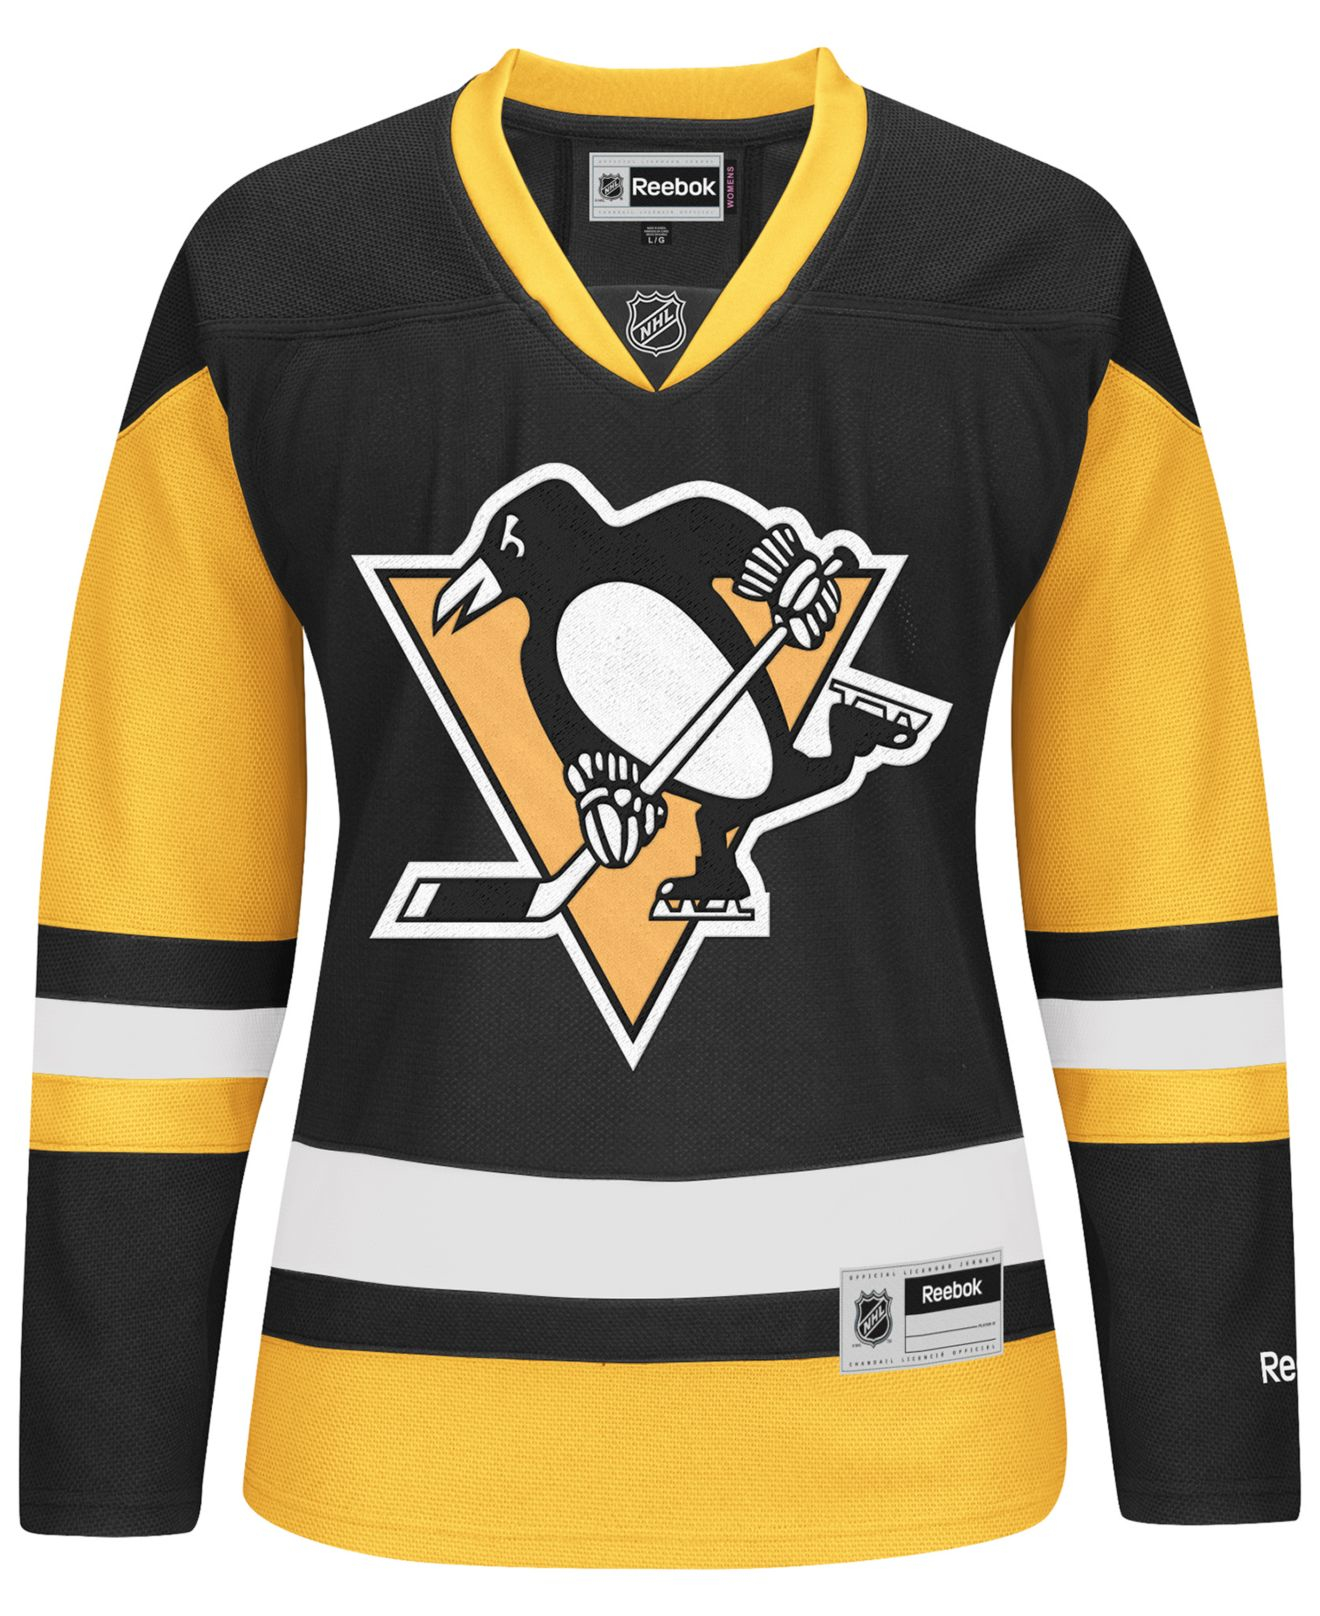 Джерси питтсбург пингвинз. Pittsburgh Penguins одежда.